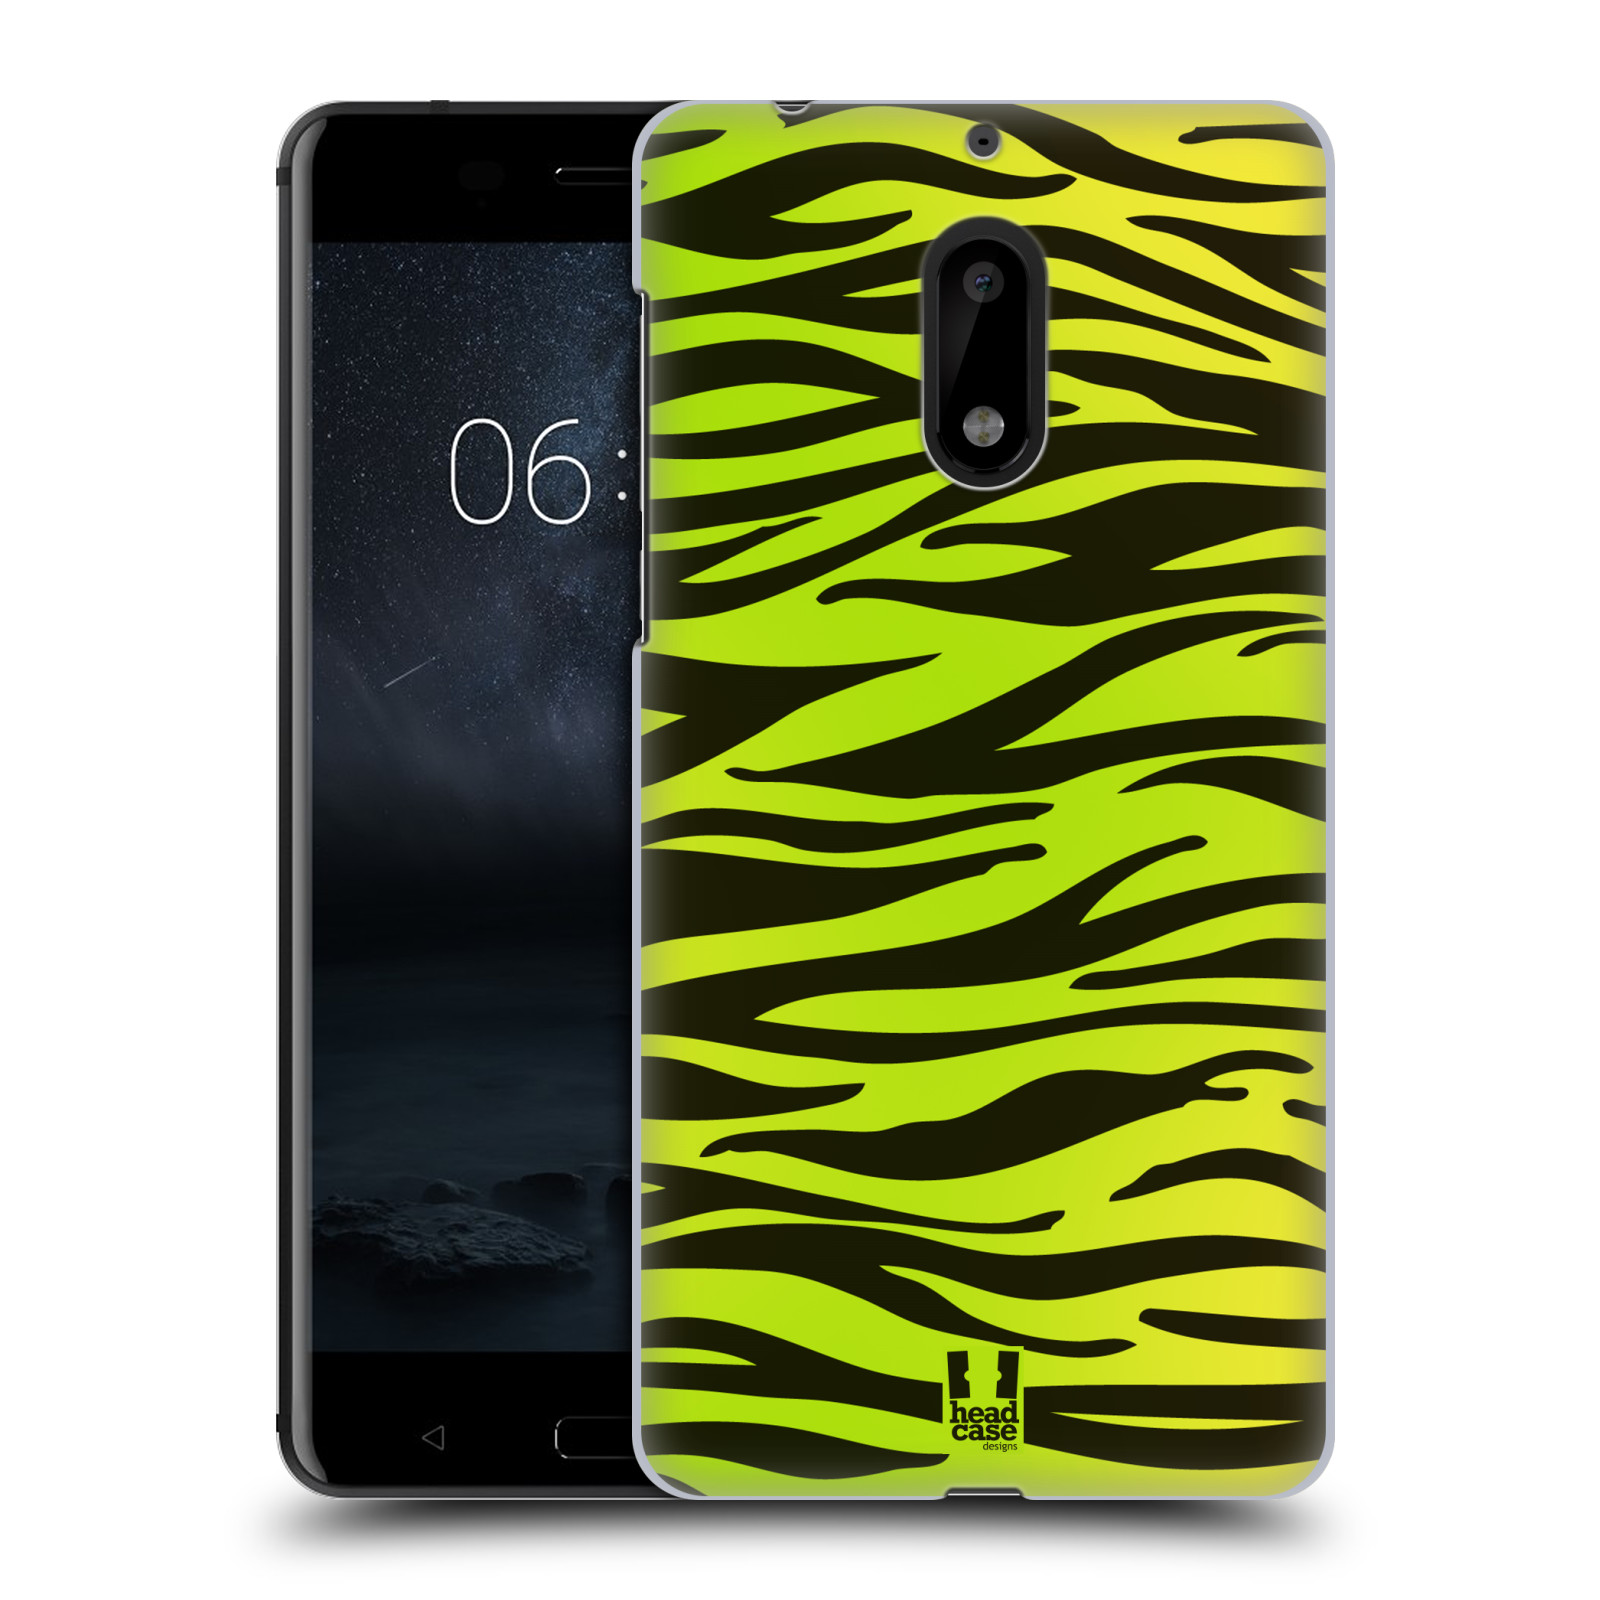 HEAD CASE plastový obal na mobil Nokia 6 vzor Divočina zvíře zelená zebra